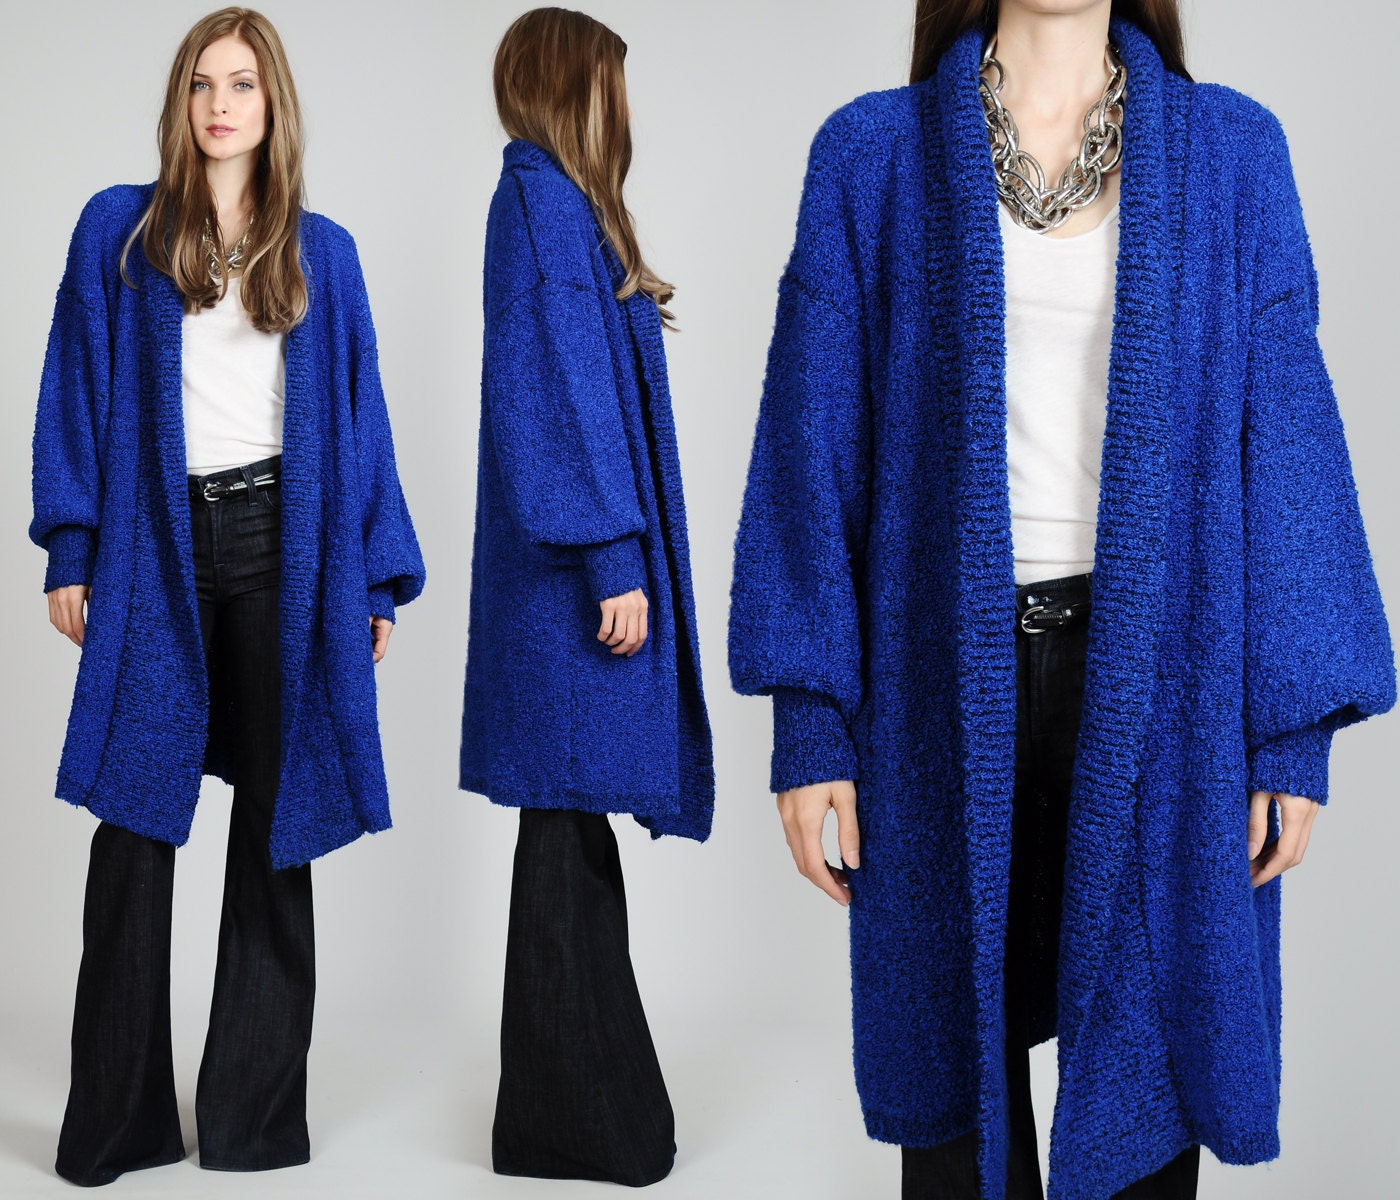 Cobalt blue cardigan sweaters for women kuwait